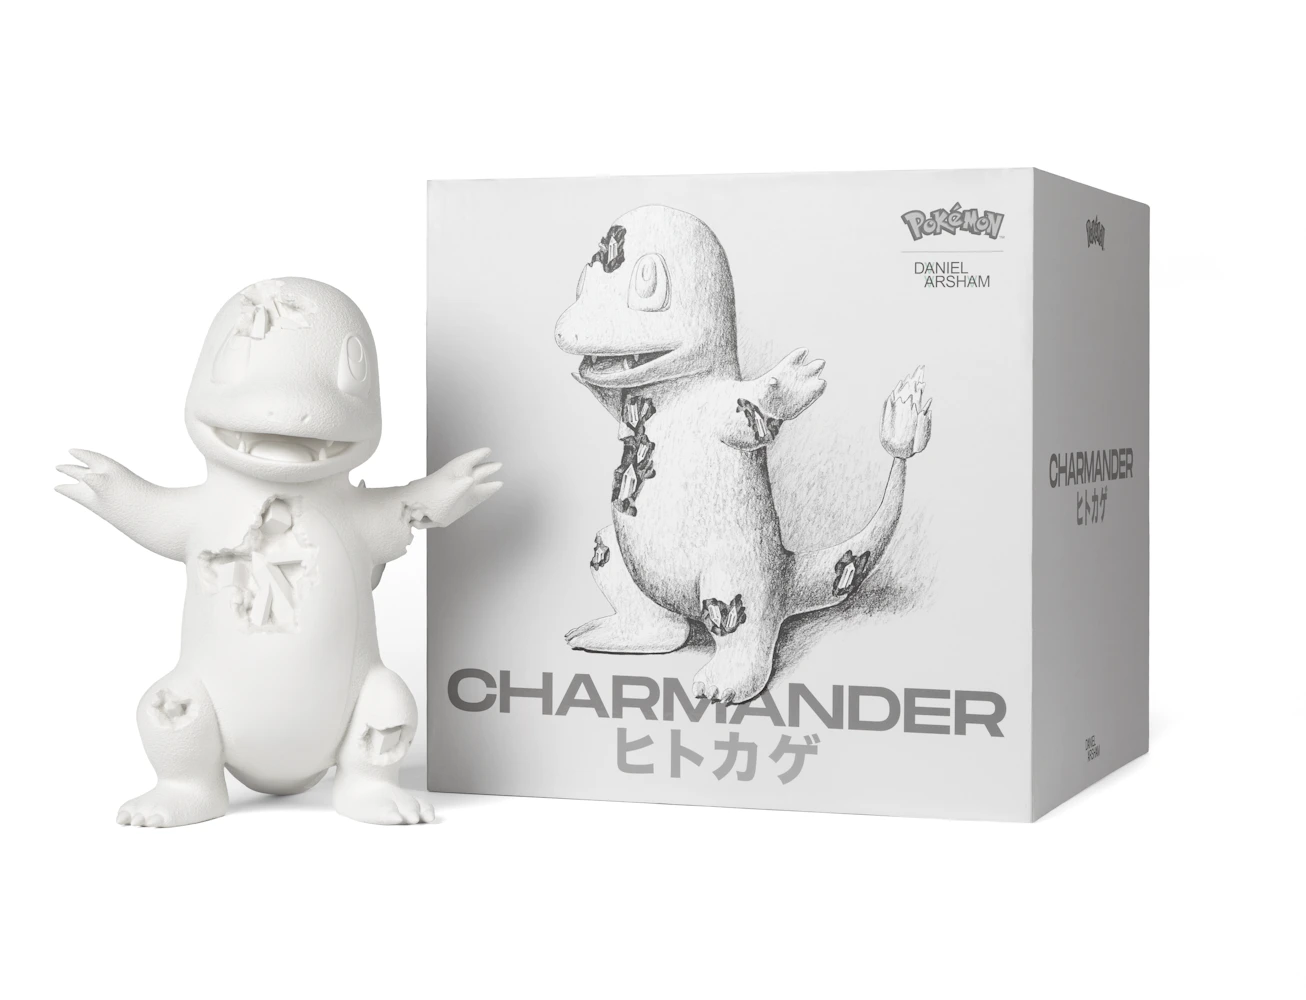 Daniel Arsham x Pokemon Crystalized Charmander Figure (Edition of 